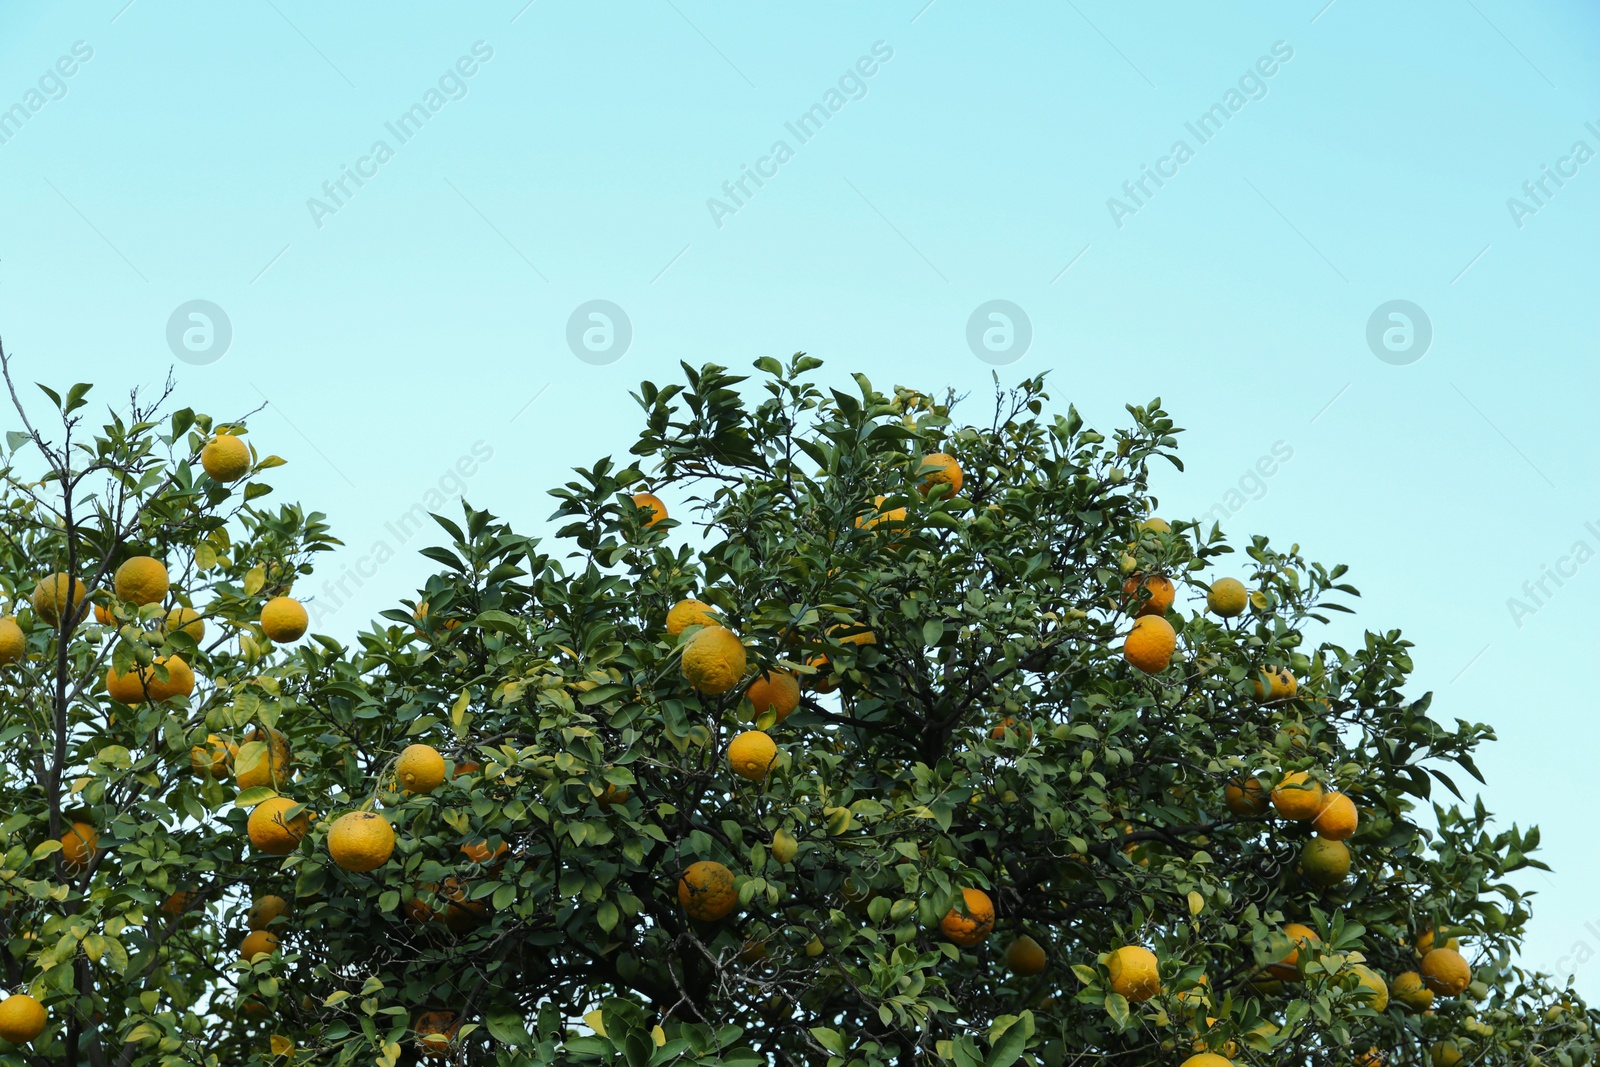 Photo of Fresh ripe oranges growing on tree against blue sky